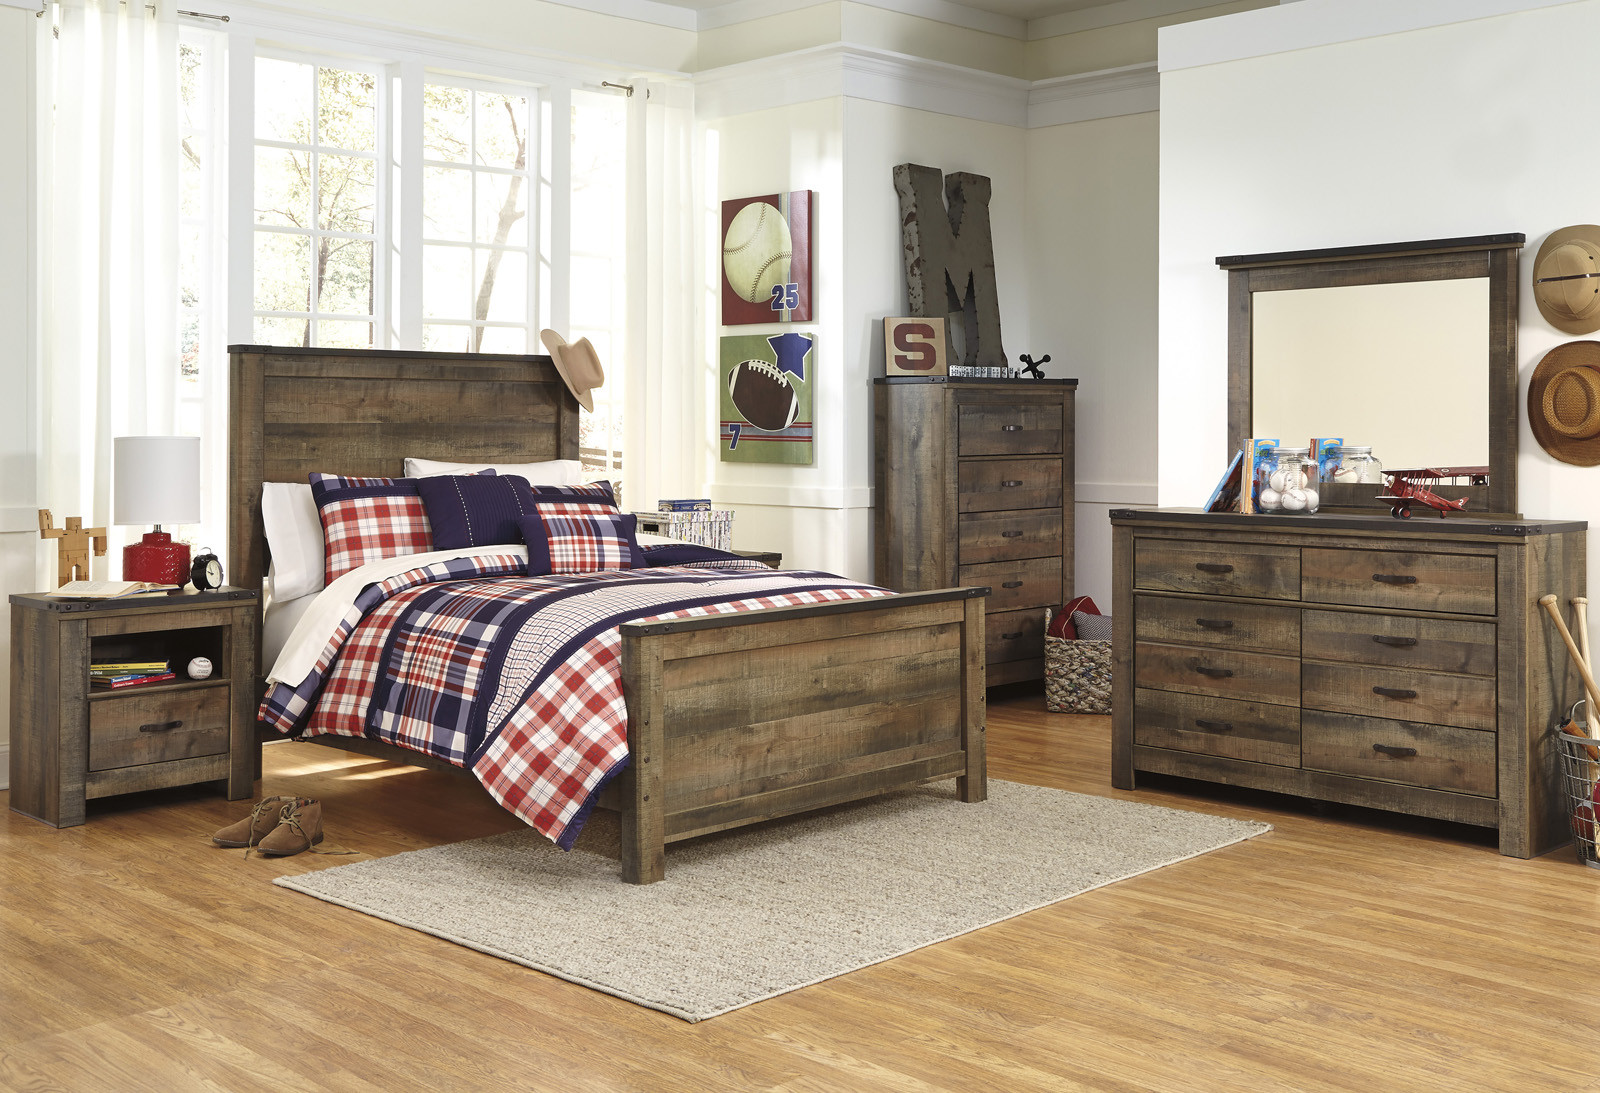 Cheap Rustic Bedroom Furniture Sets
 Trinell 4 Piece Panel Bedroom Set in Warm Rustic Oak